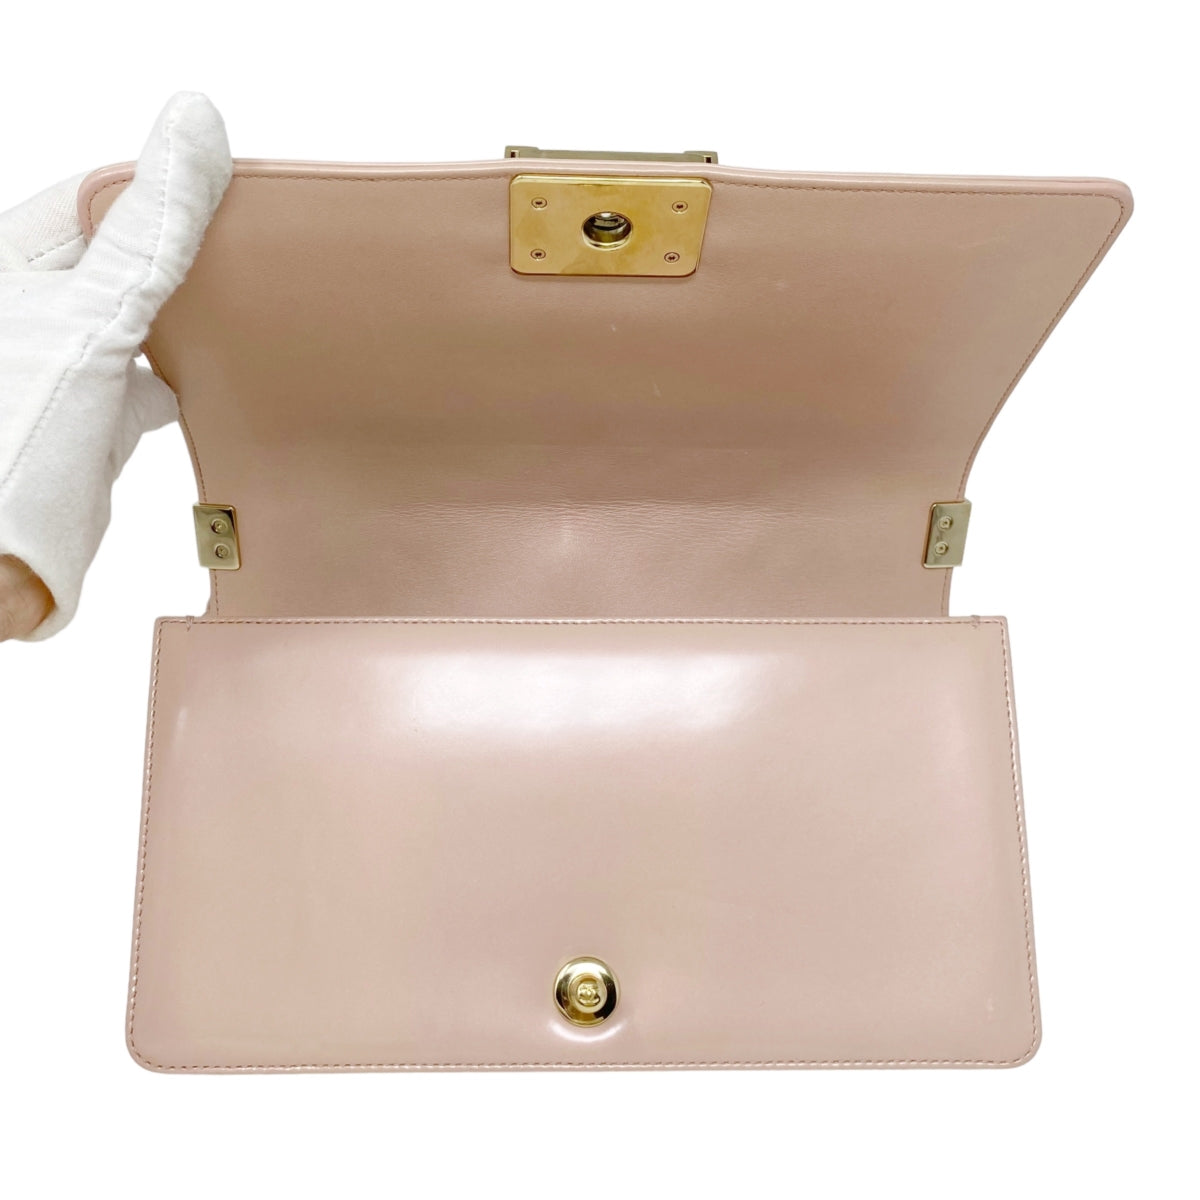 Chanel Iridescent Pink Medium Boy Bag